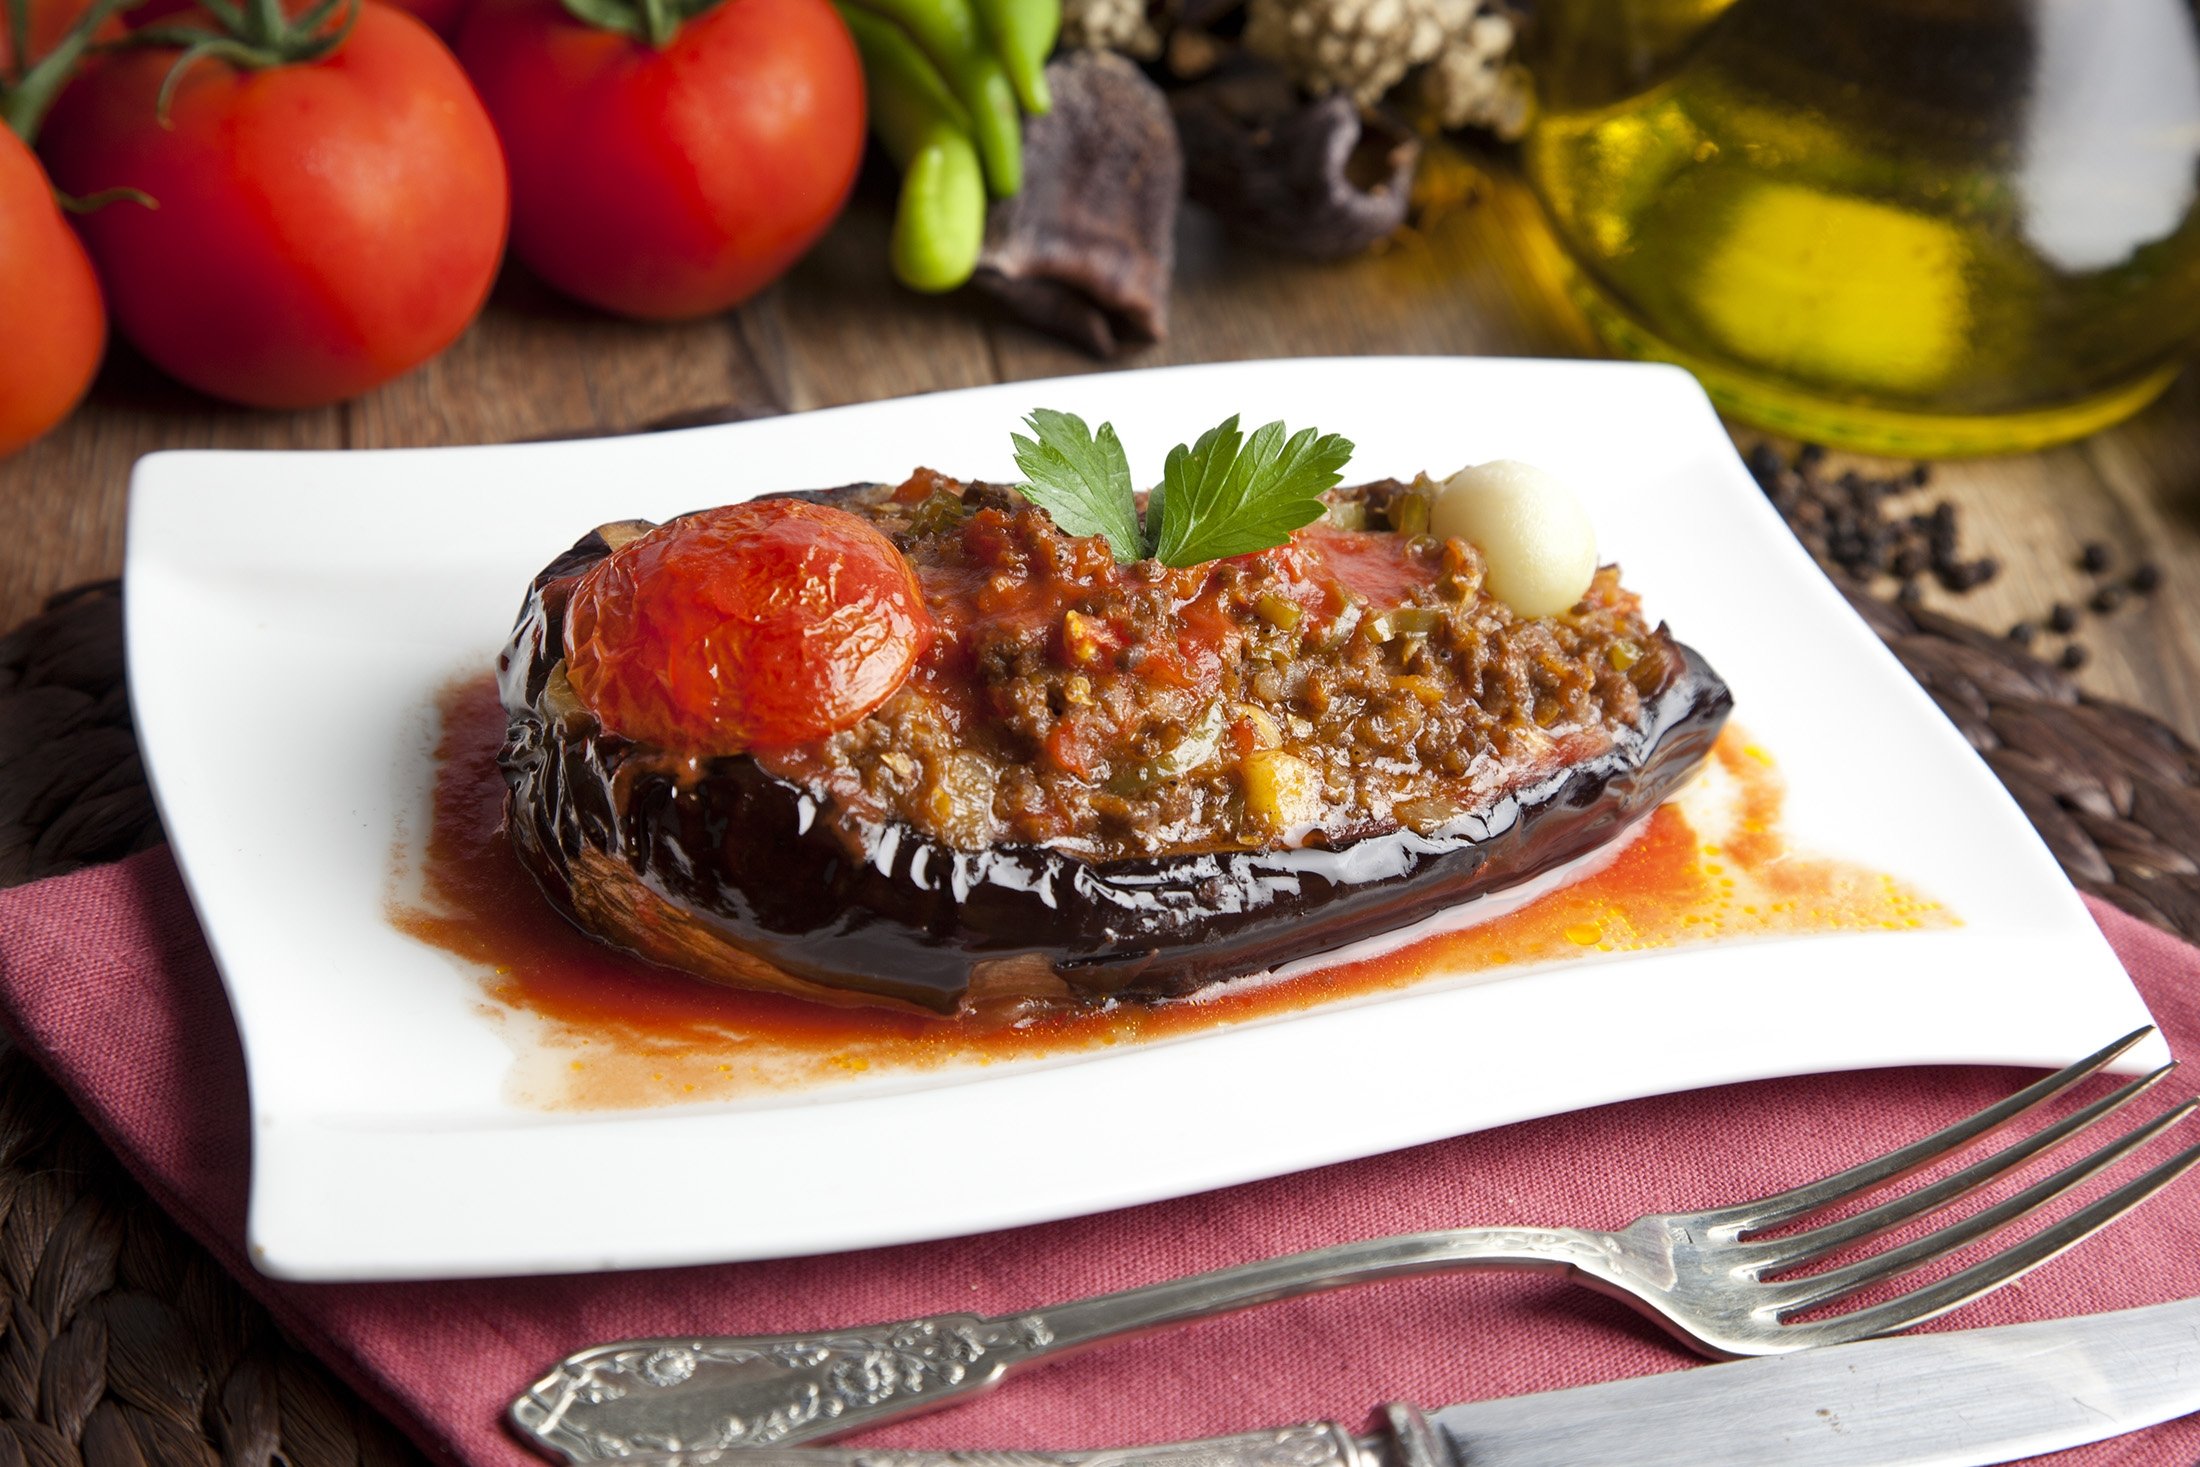 Karnıyarık is perhaps the most popular eggplant dish in Turkish cuisine. (Shutterstock Photo)